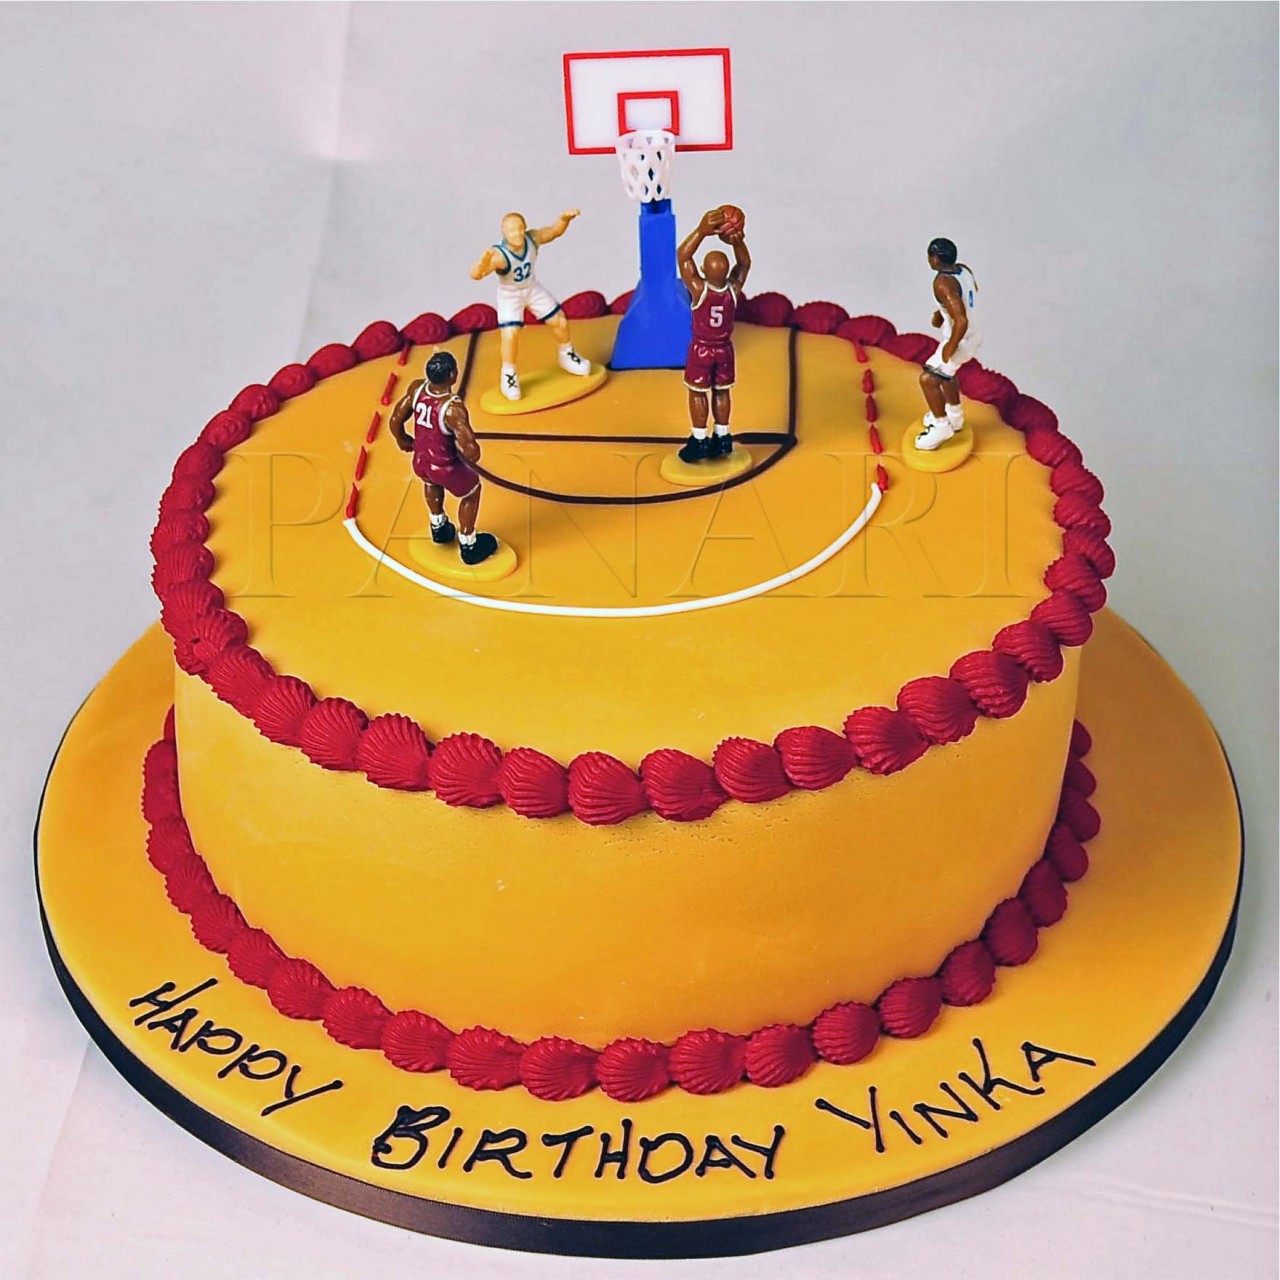 Basketball Birthday Cake Designs